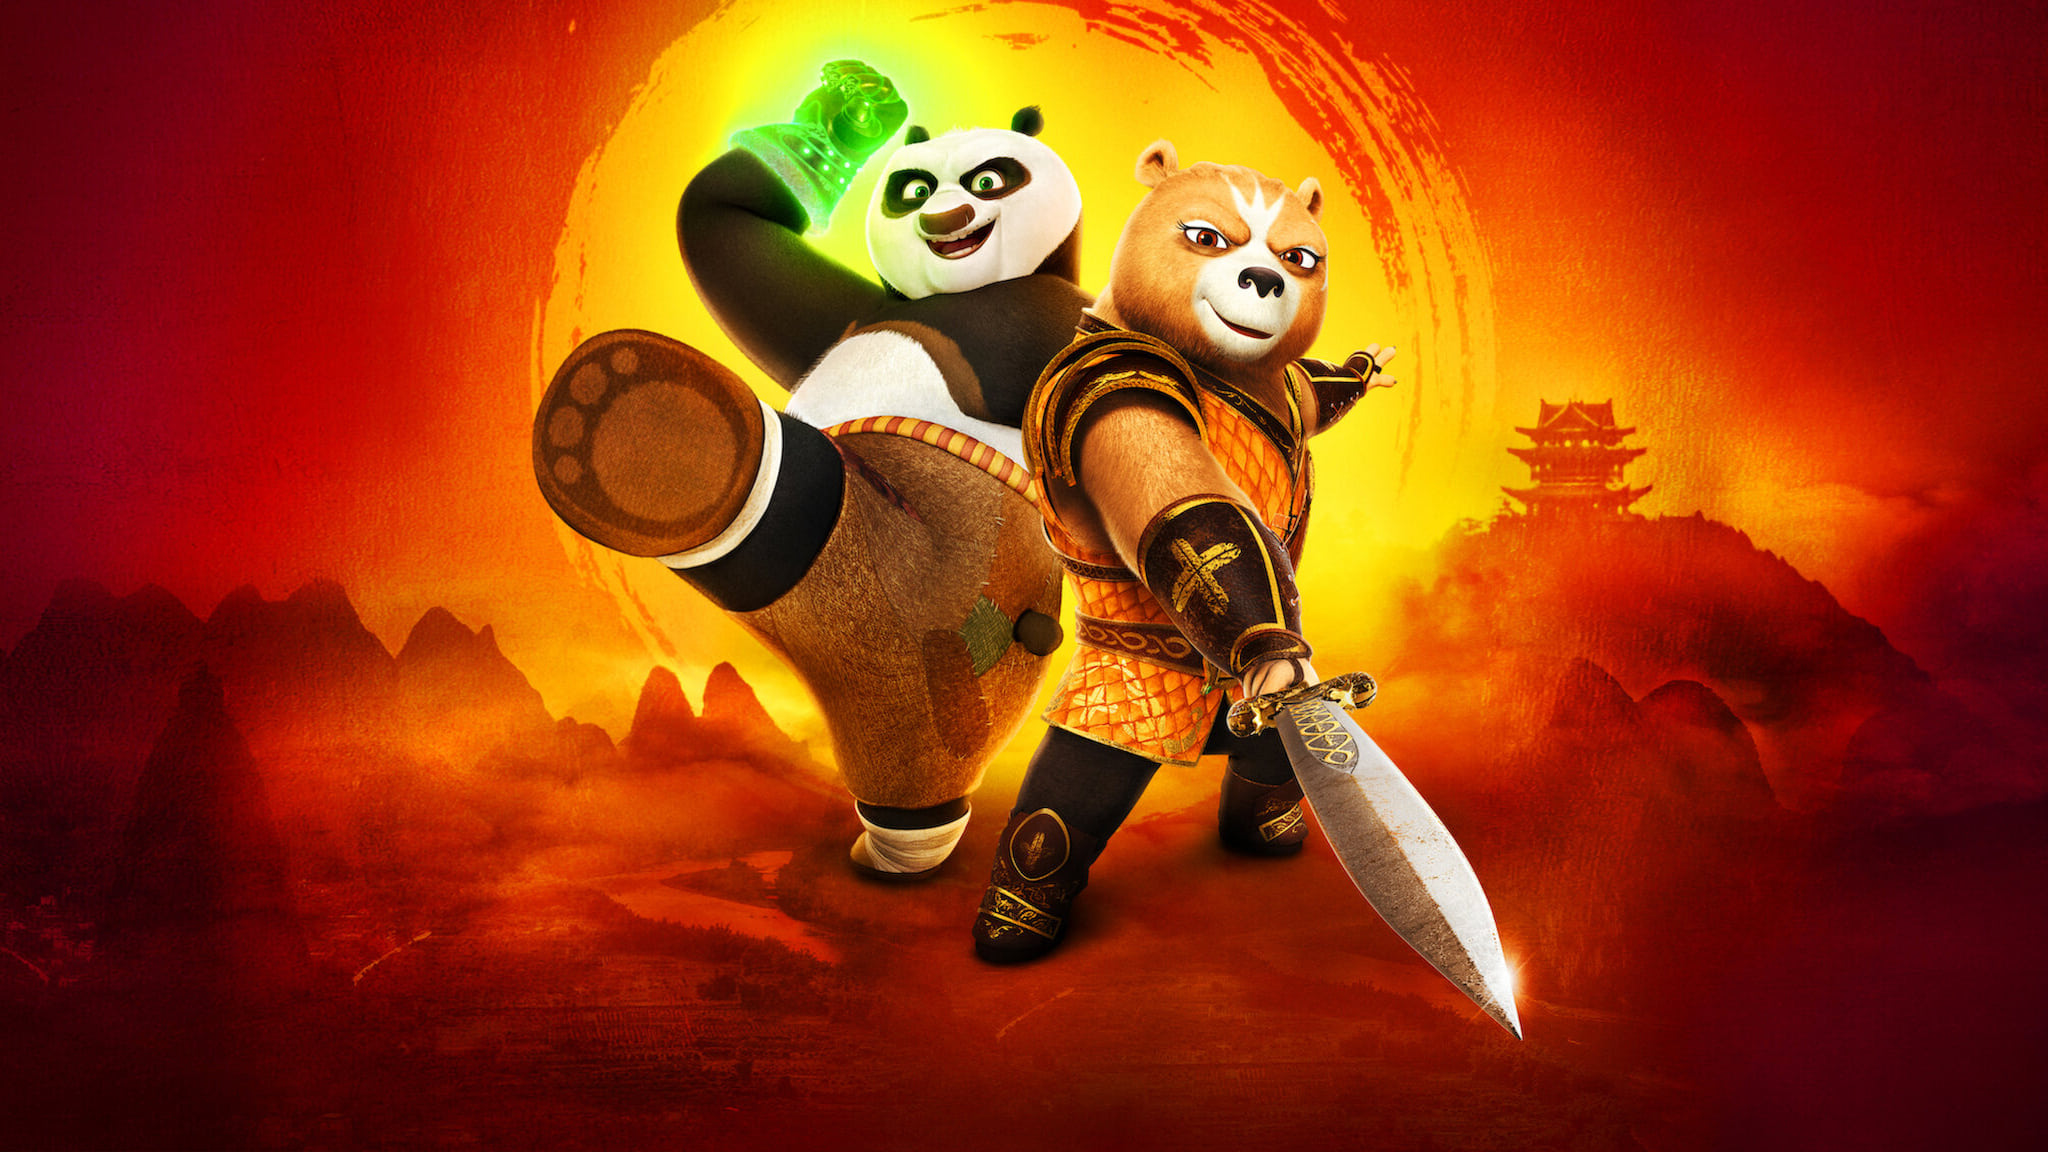 Kung Fu Panda : Le Chevalier Dragon